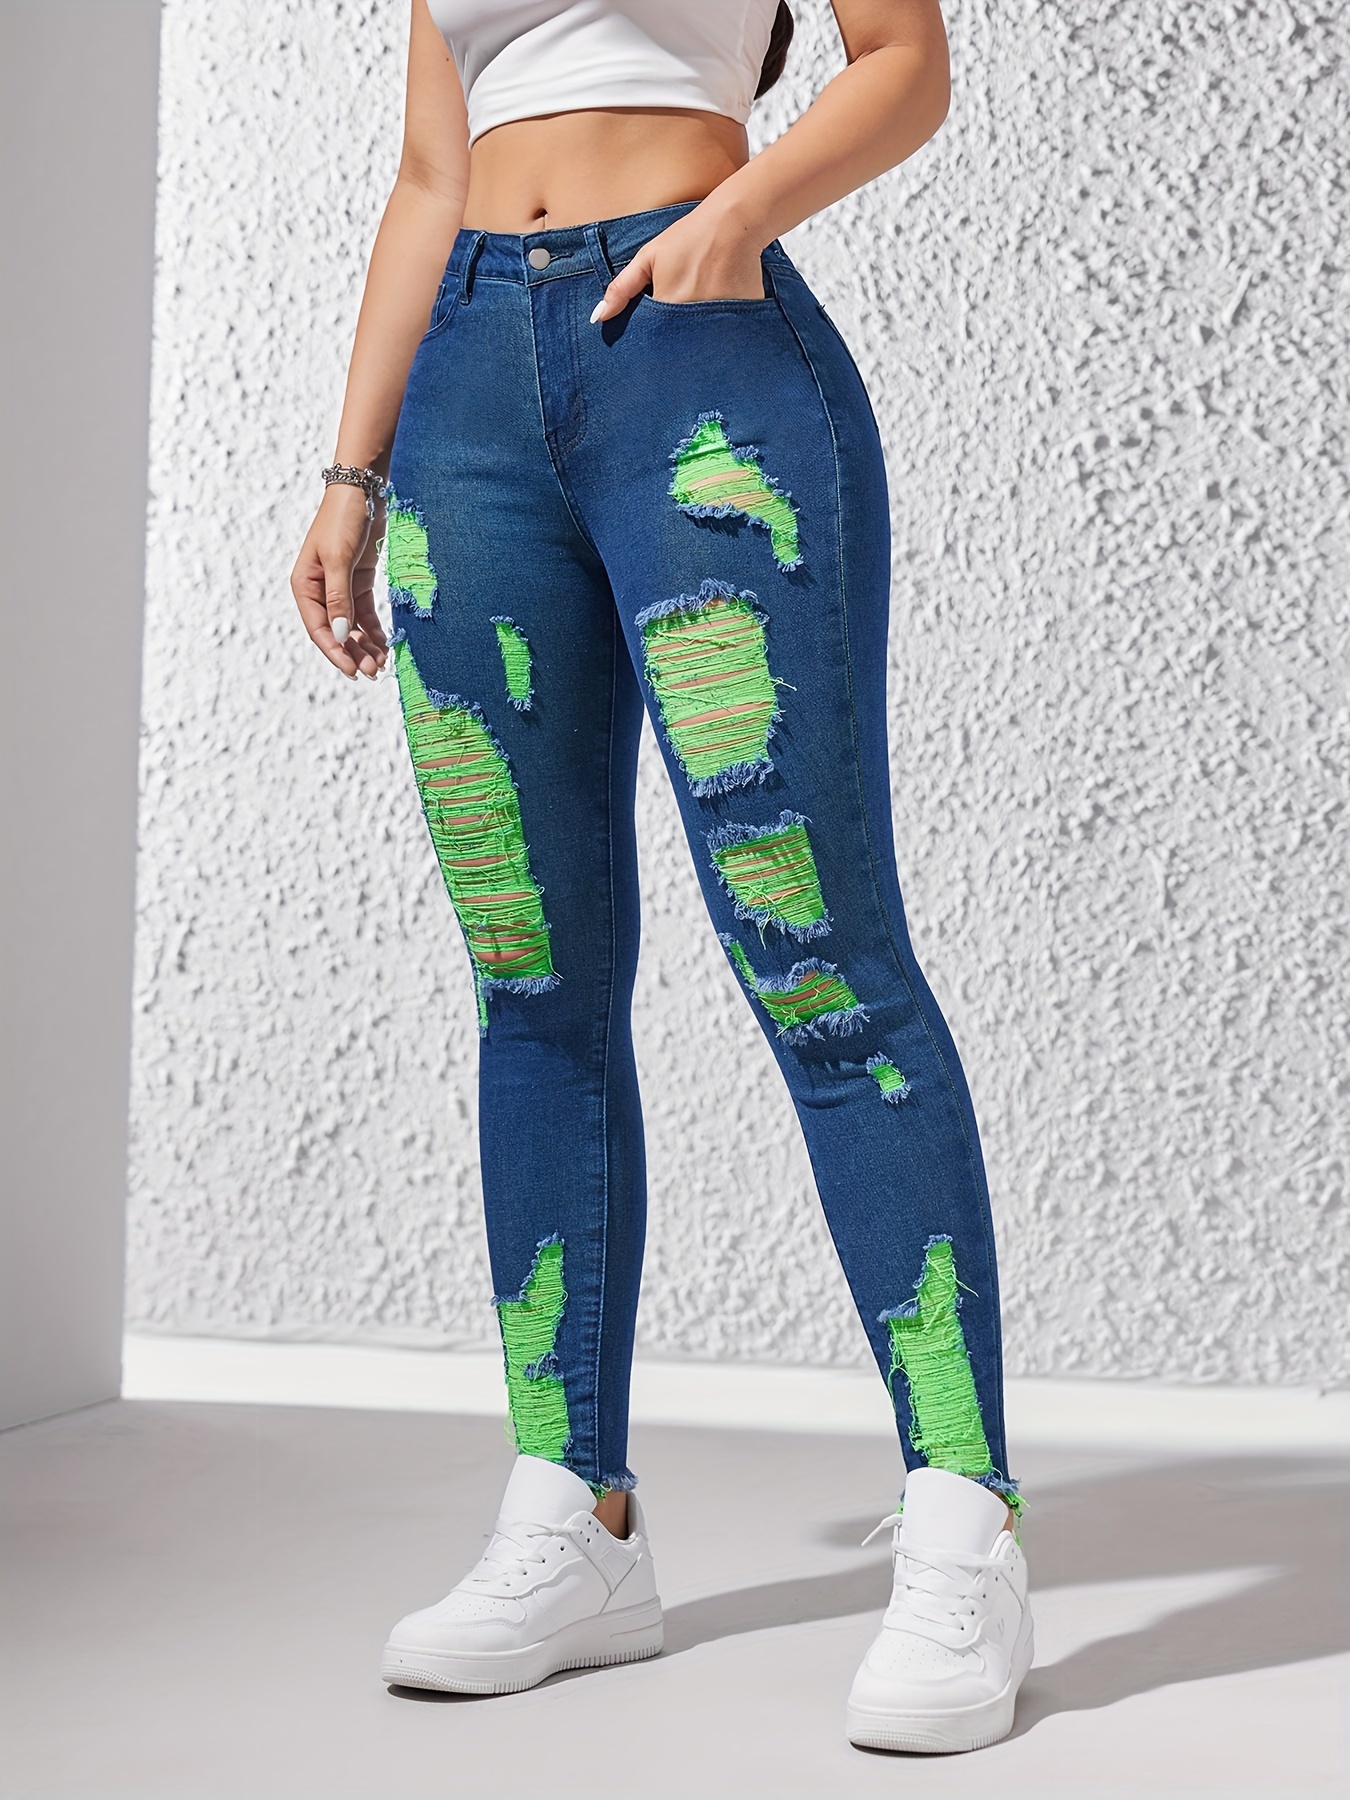 Skksst Womens Stretch Ripped Denim Jeans Printed Tight Pants